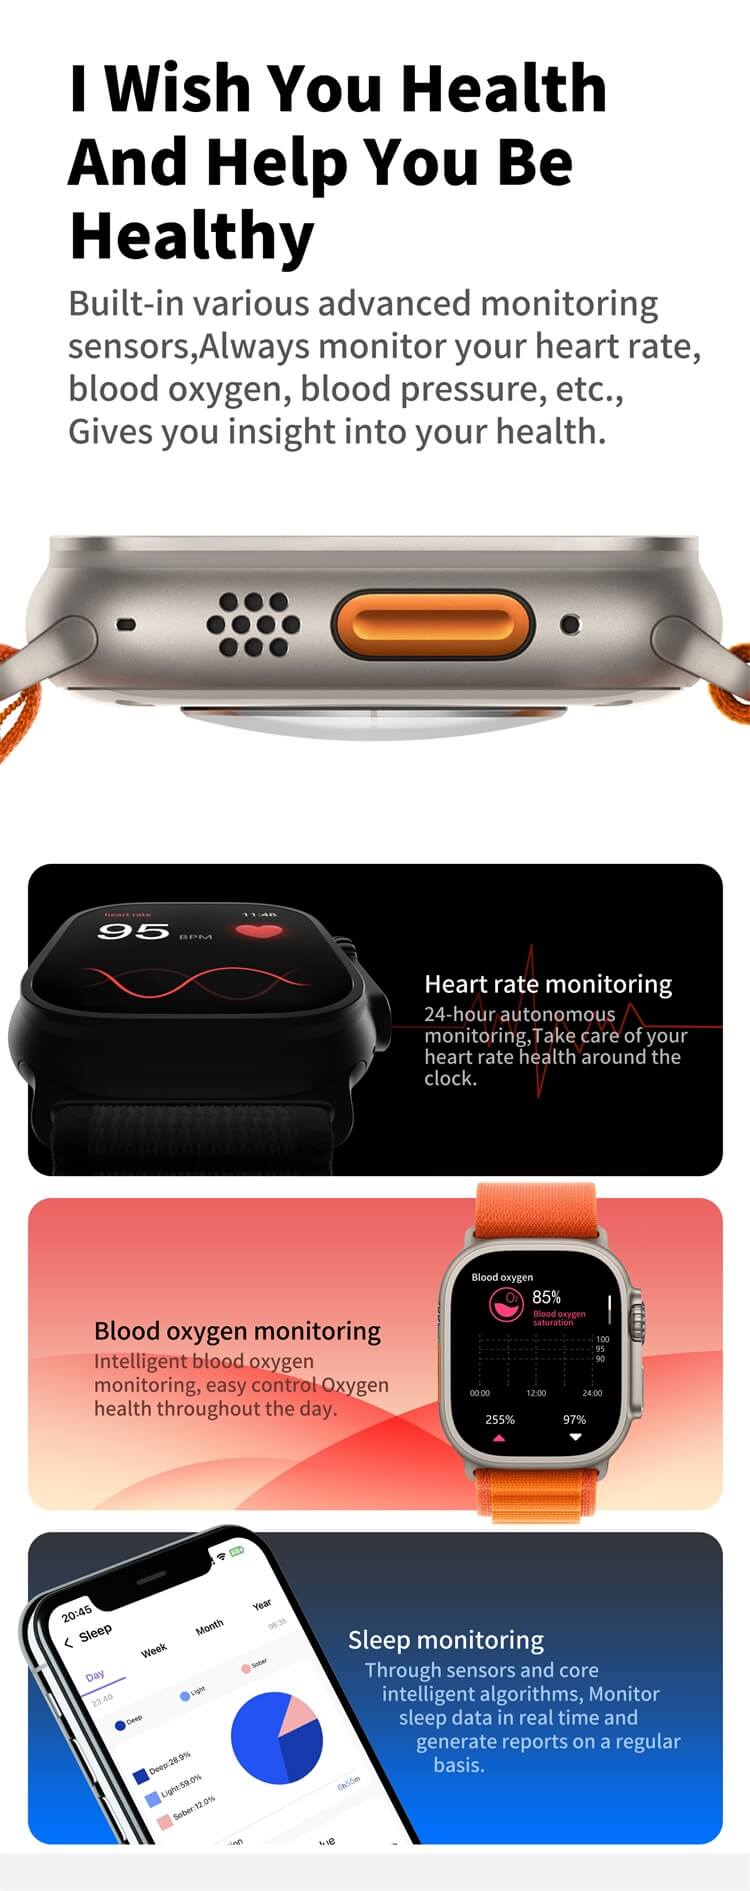 MT78 Ultra 2.2 Inches Super Large Screen Smart Watch-Shenzhen Shengye Technology Co.,Ltd